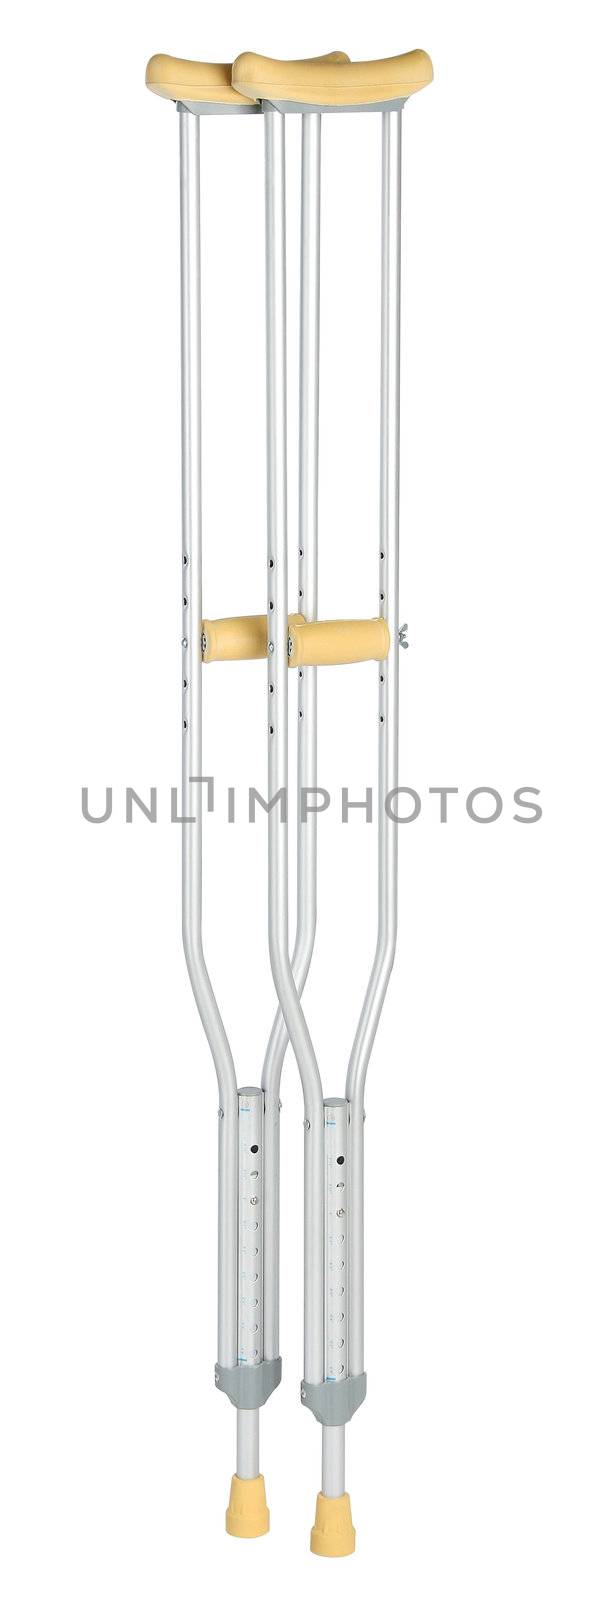 Pair of crutches by Erdosain